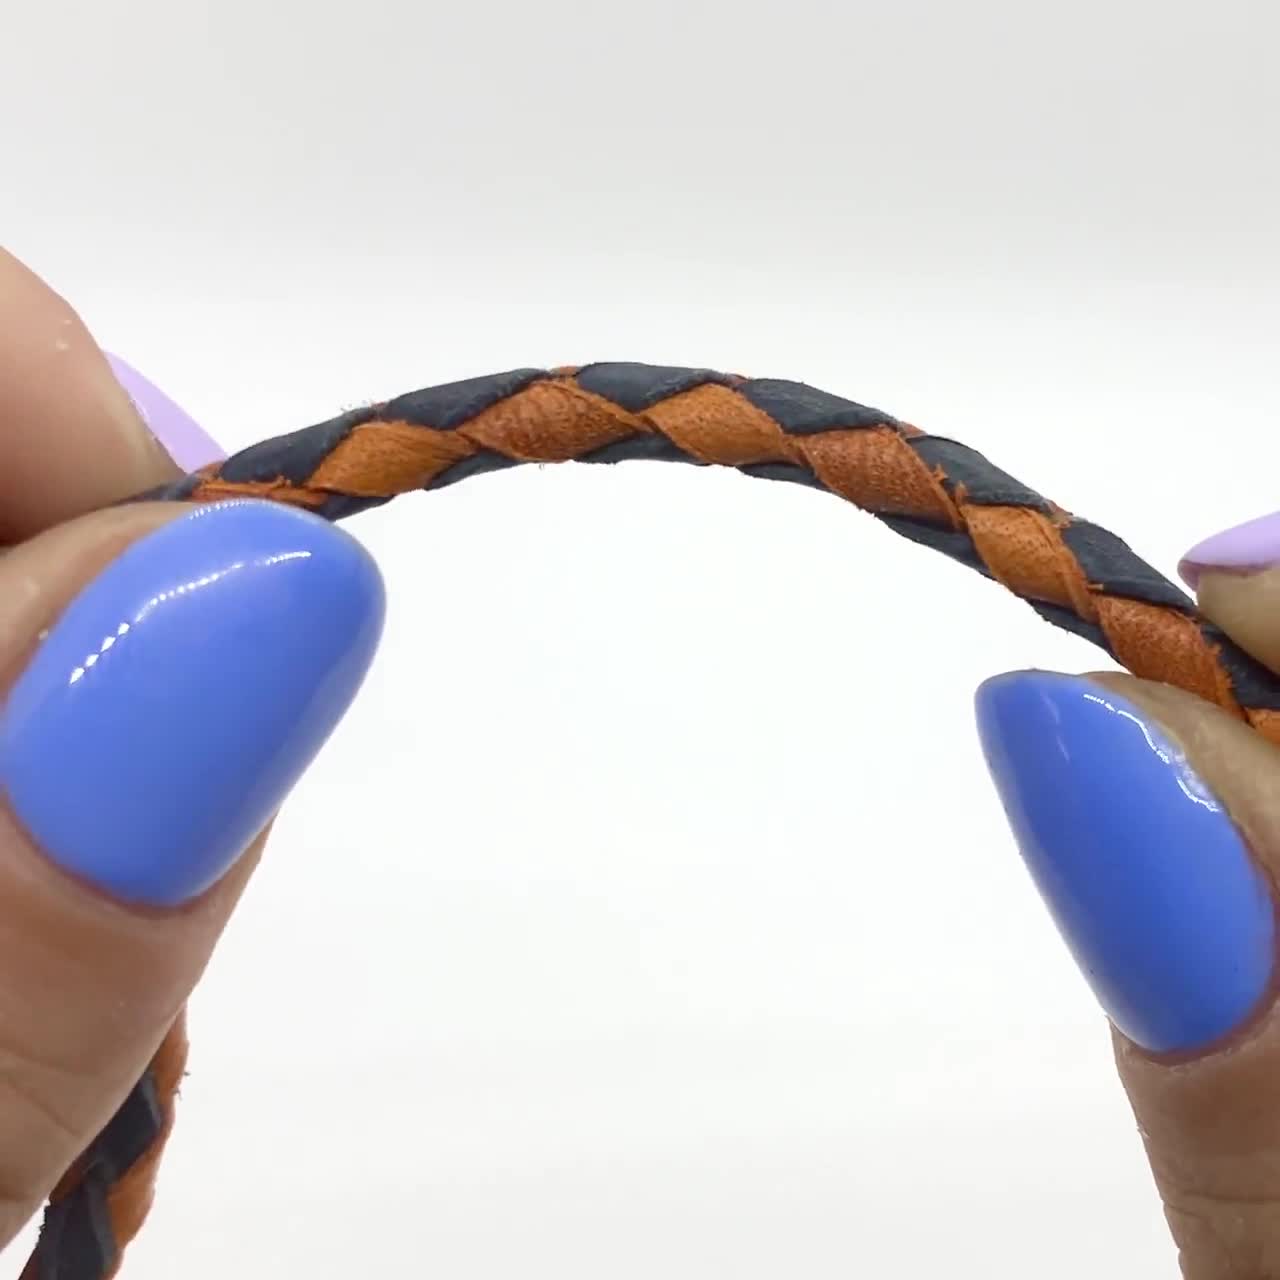 Round braided leather cord Ø2,5mm - black+orange, 4,60 €